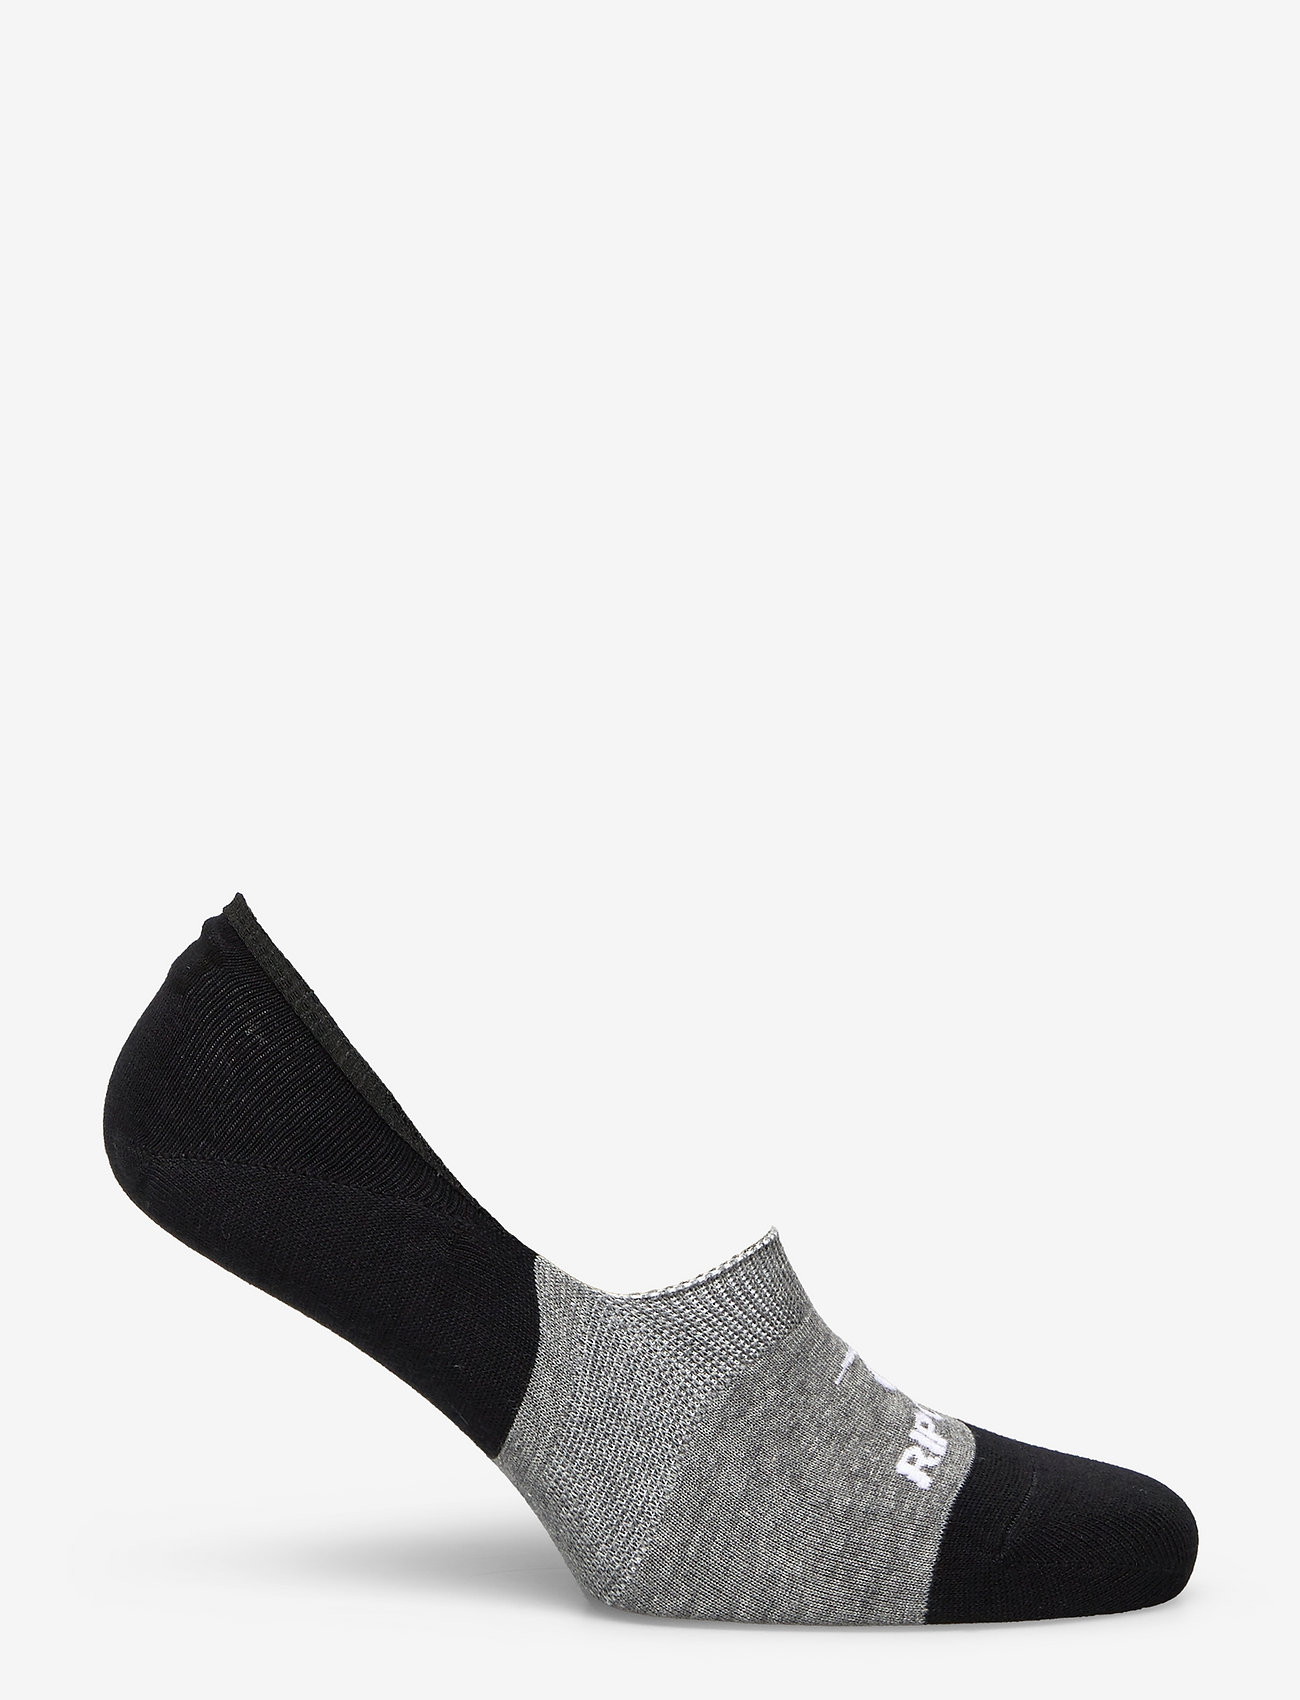 Rip Curl Invisi Sock In A Box - Ankle socks | Boozt.com